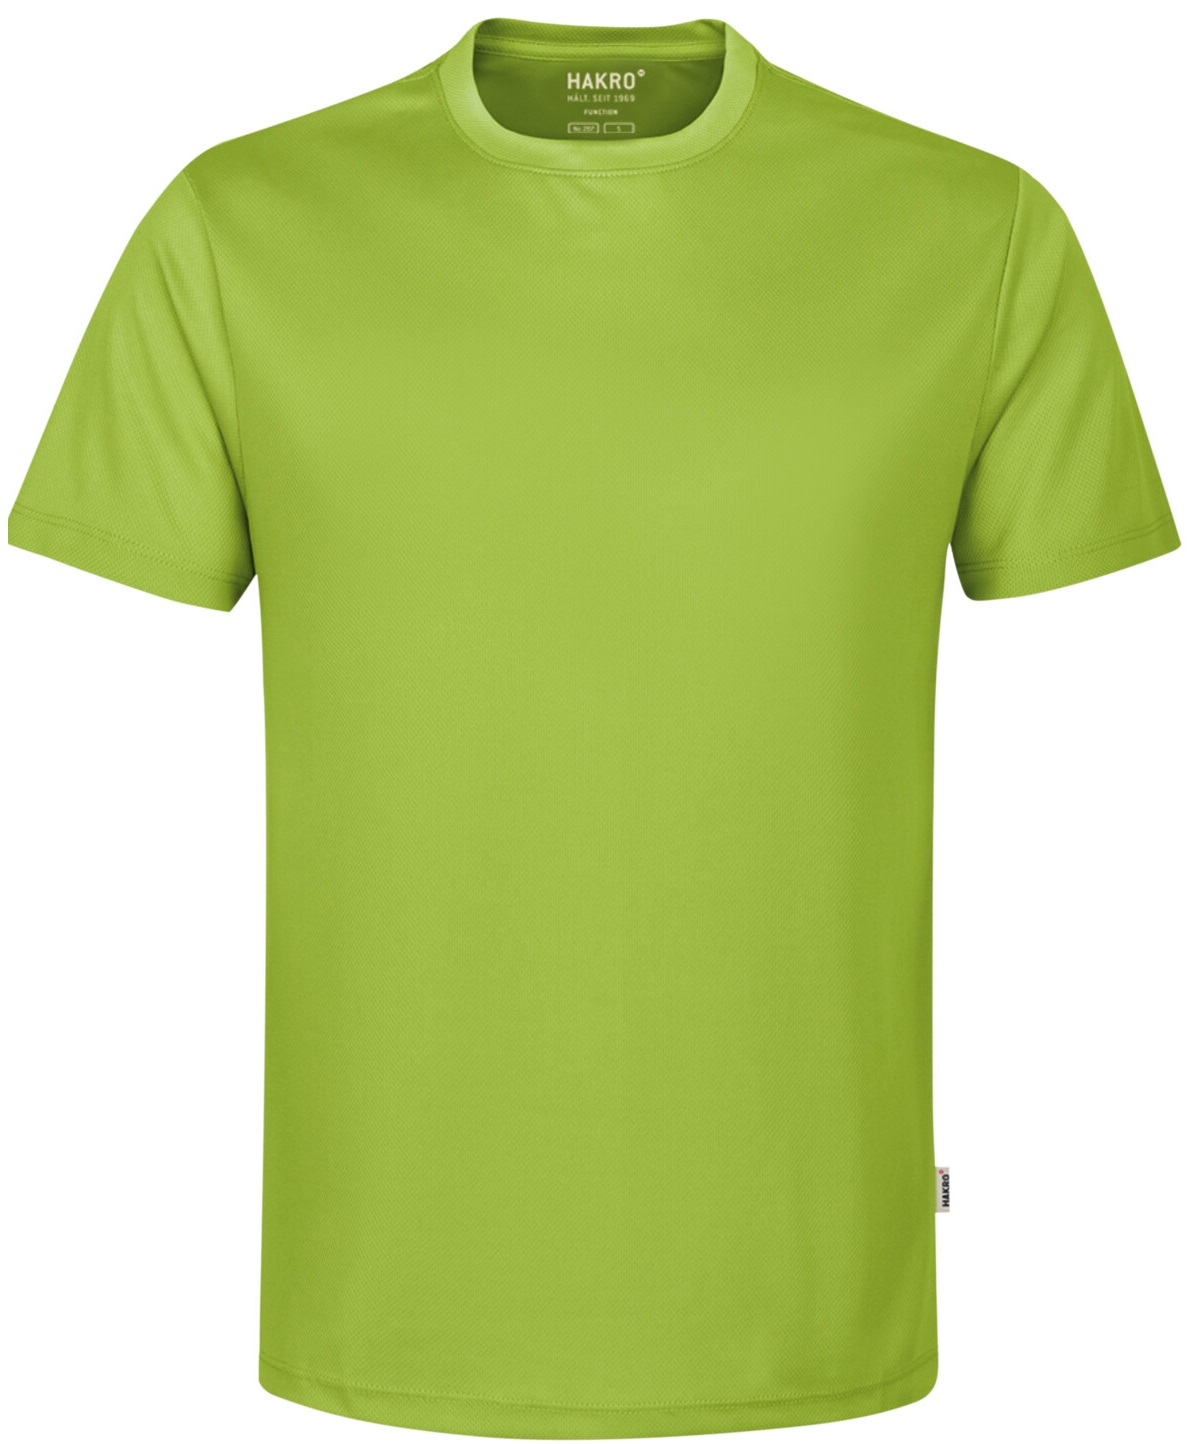 Hakro T-Shirt Coolmax